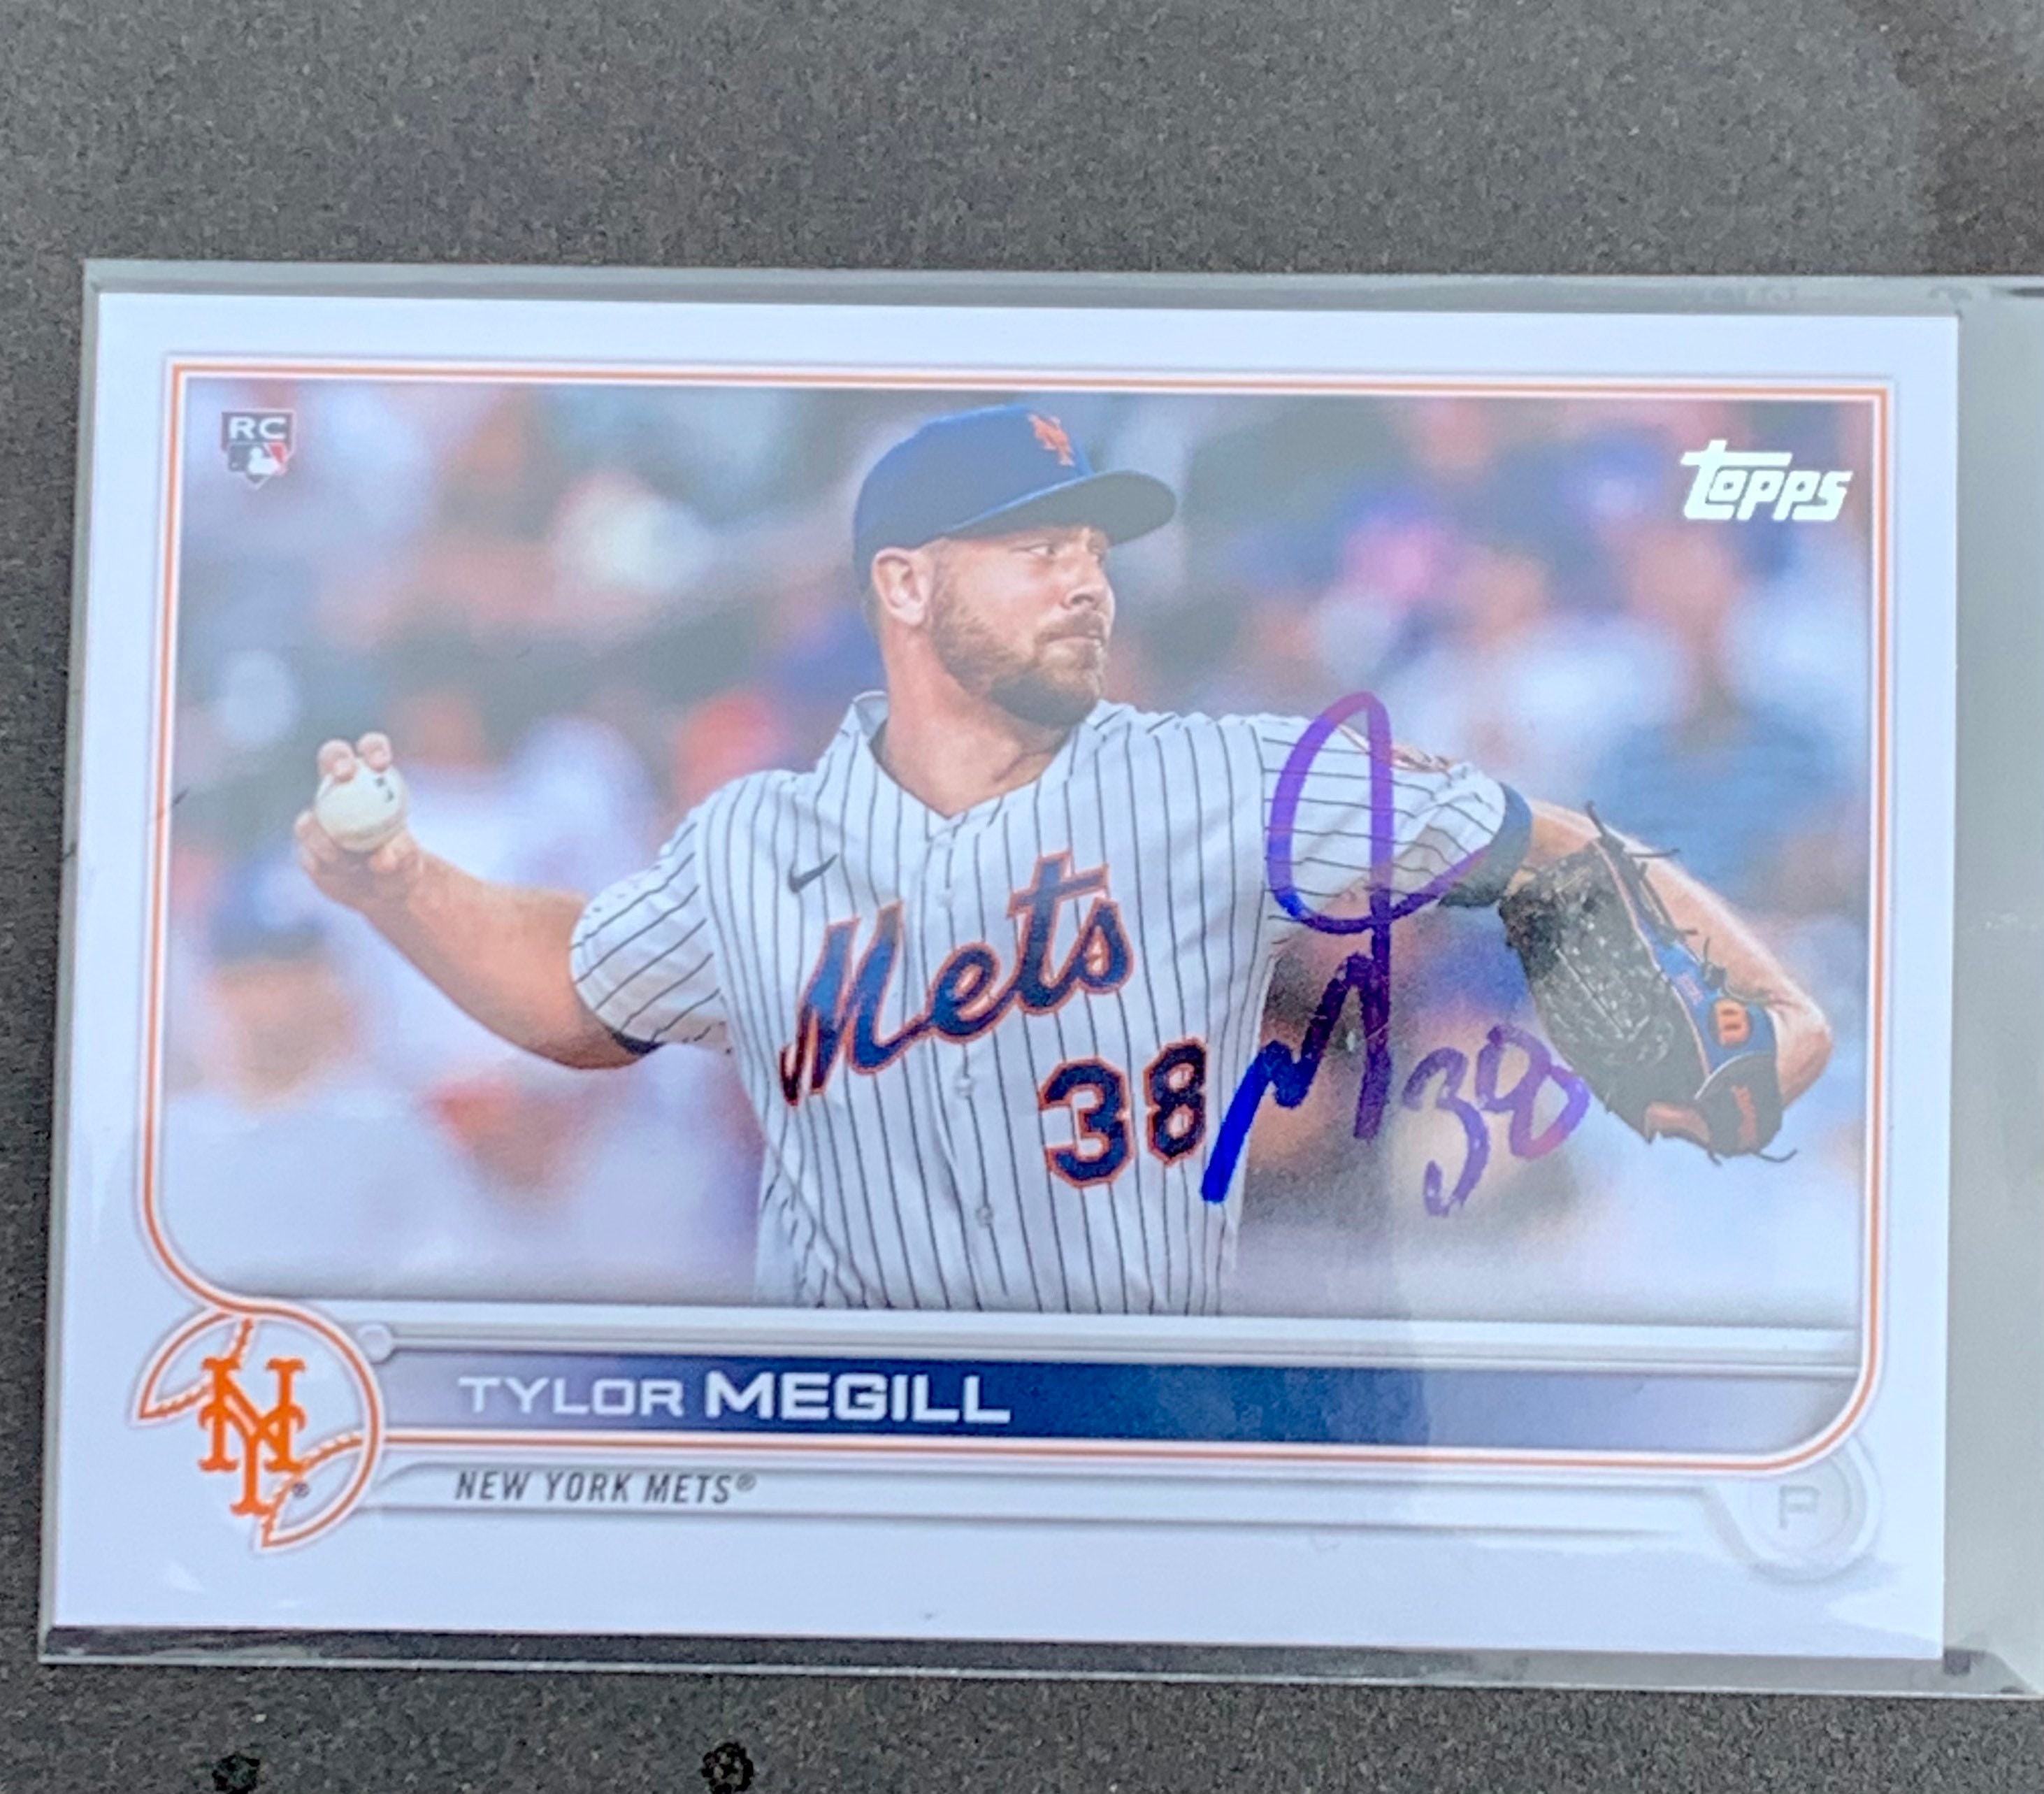 New York Mets - Tylor Megill had quite the hometown crowd